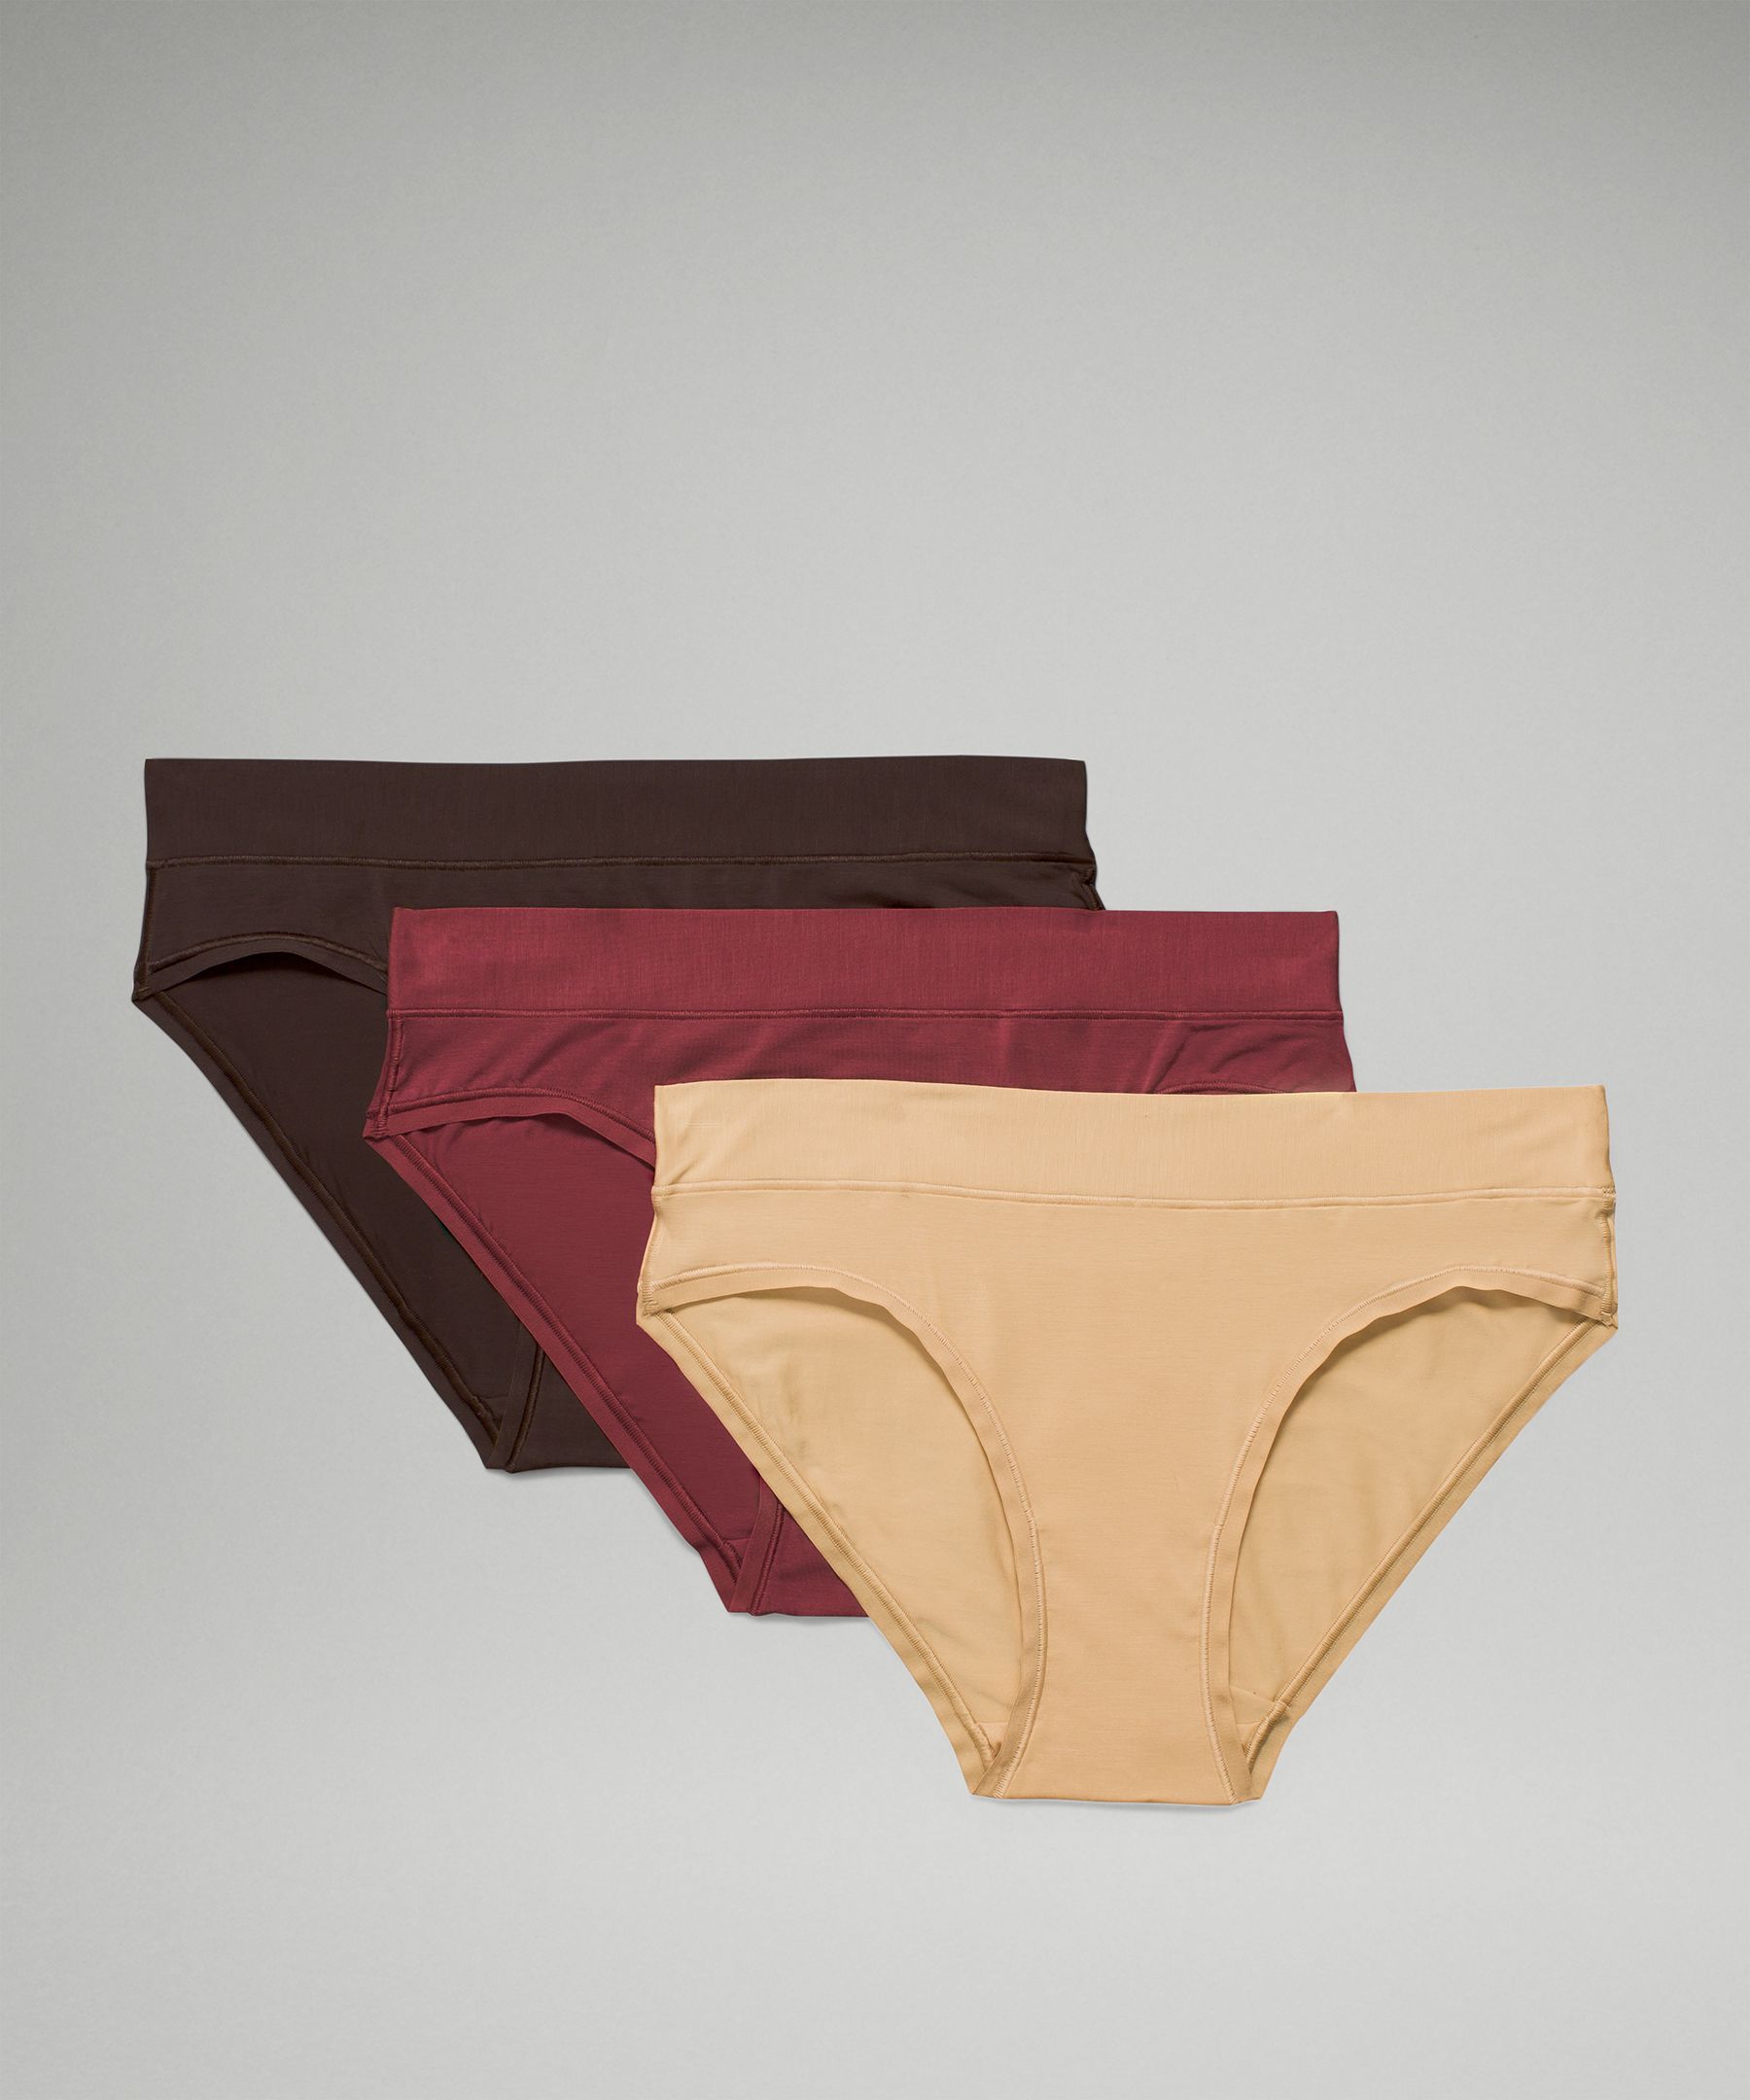 Lululemon Underease Mid-rise Bikini Underwear 3 Pack In Mulled Wine/pecan Tan/french Press